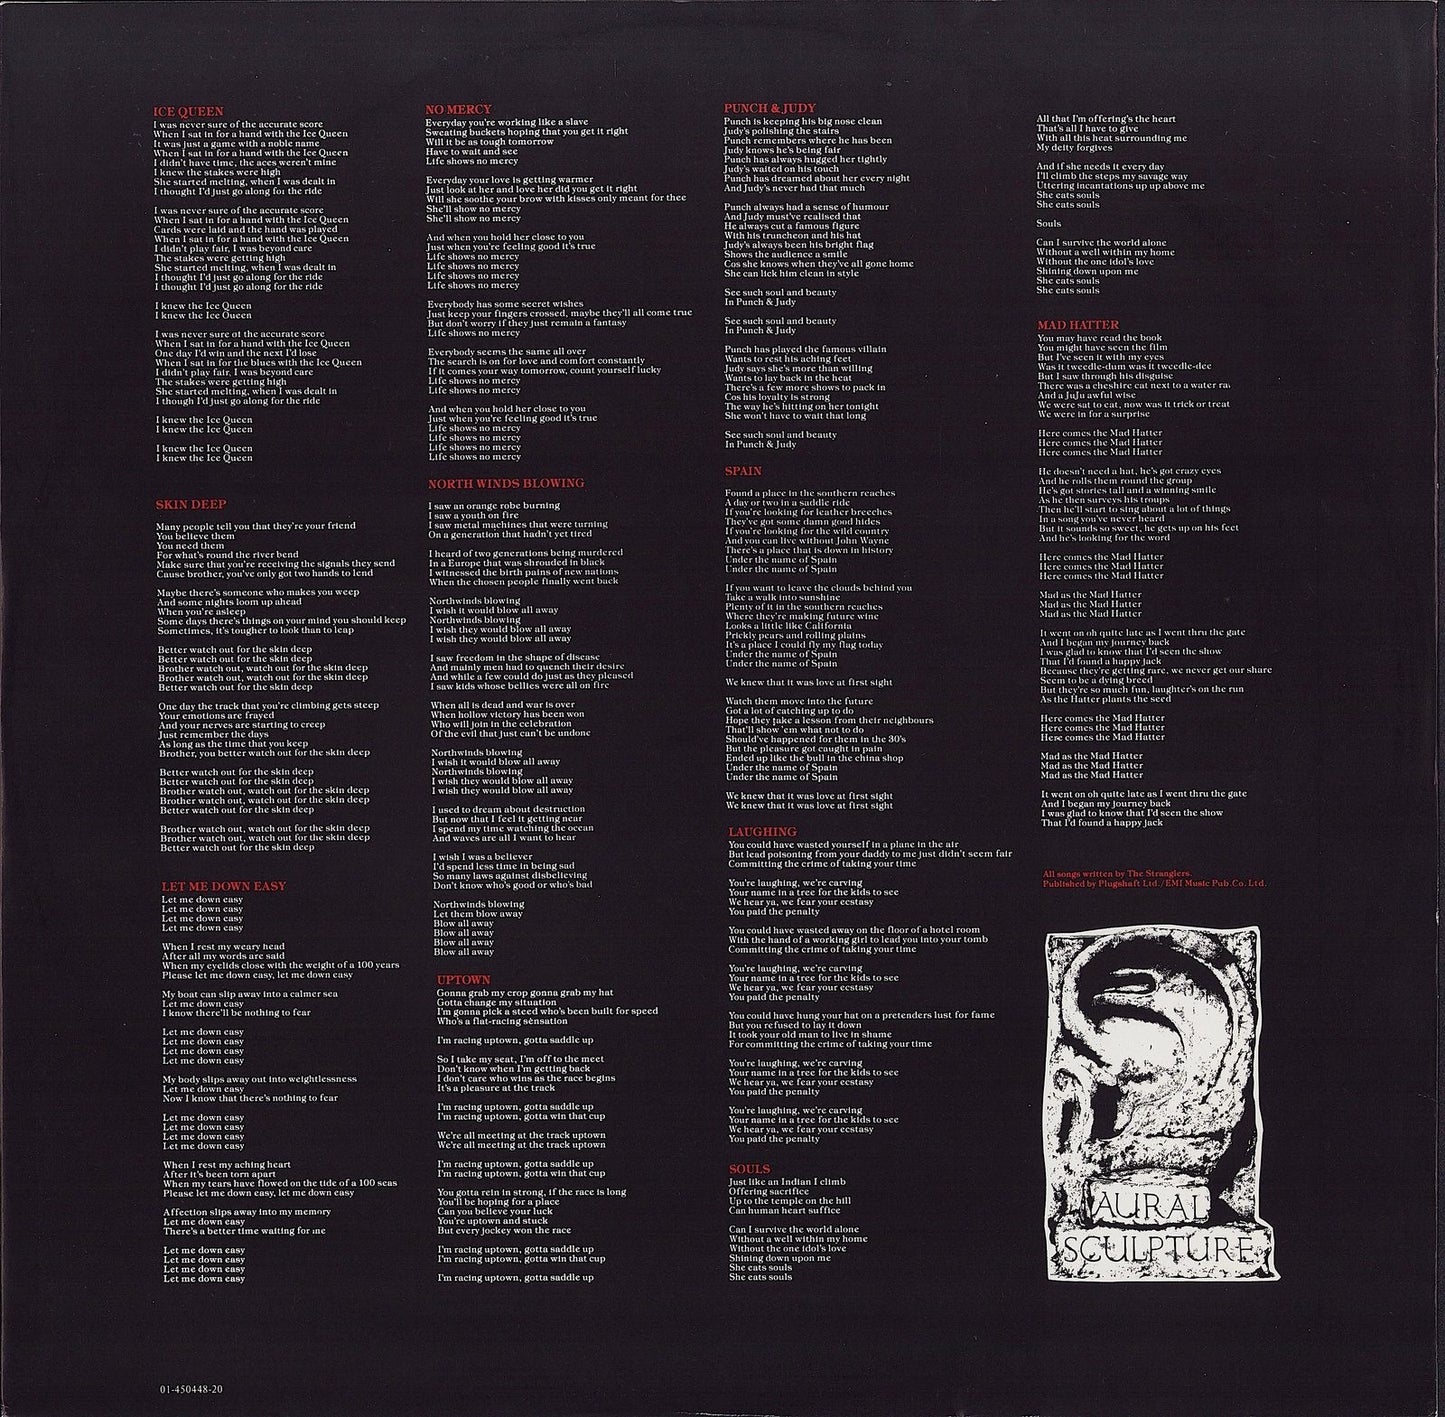 The Stranglers - Aural Sculpture Vinyl LP